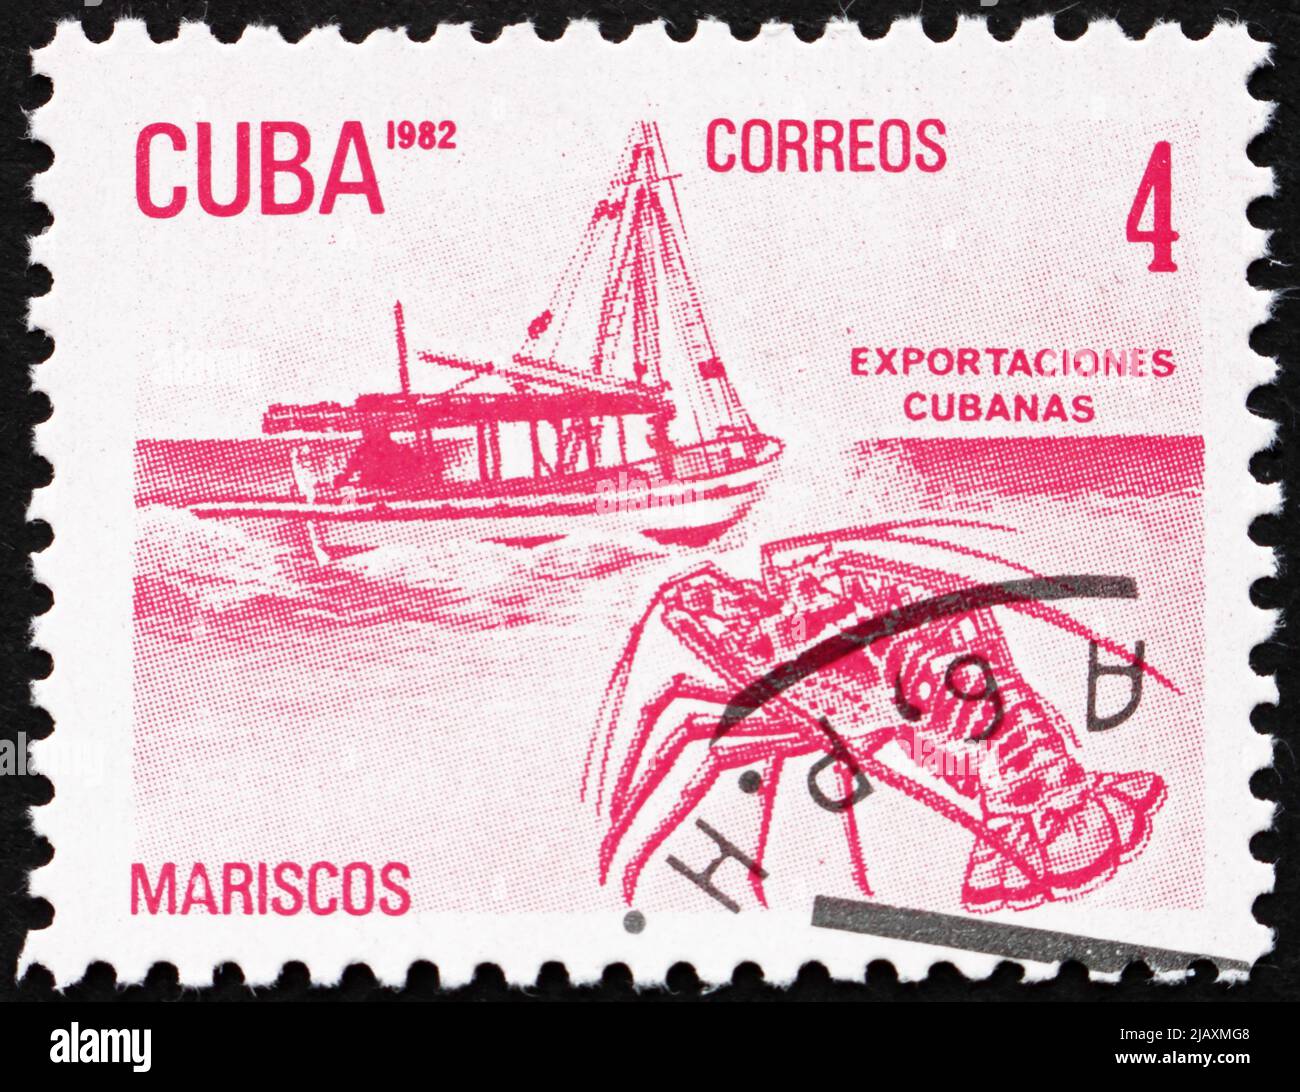 CUBA - CIRCA 1982: a stamp printed in the Cuba shows Lobster, Cuban Export, circa 1982 Stock Photo